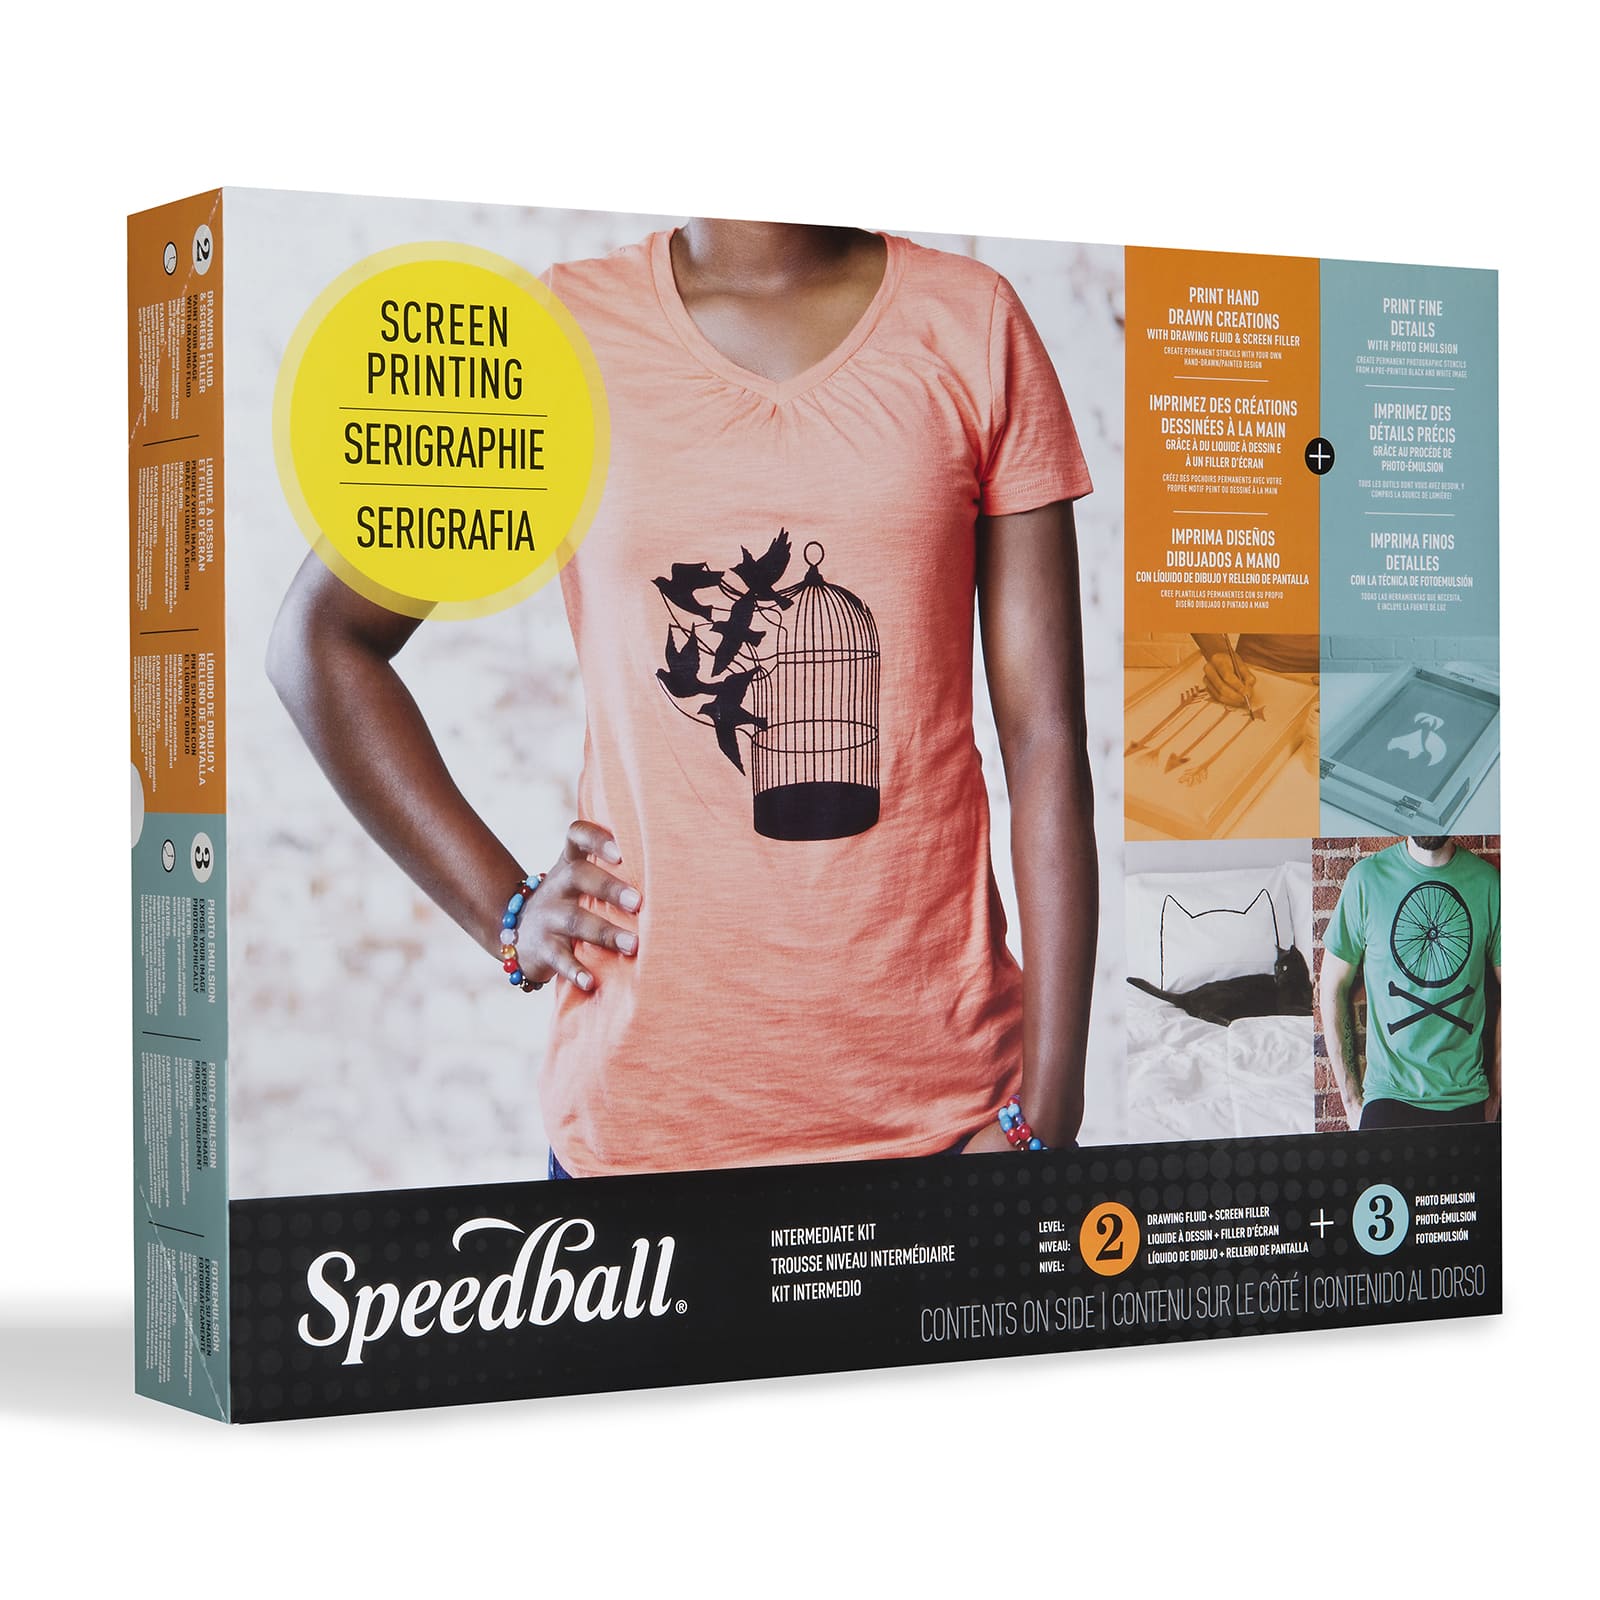 Speedball Speed Screens Screen Printing Kit